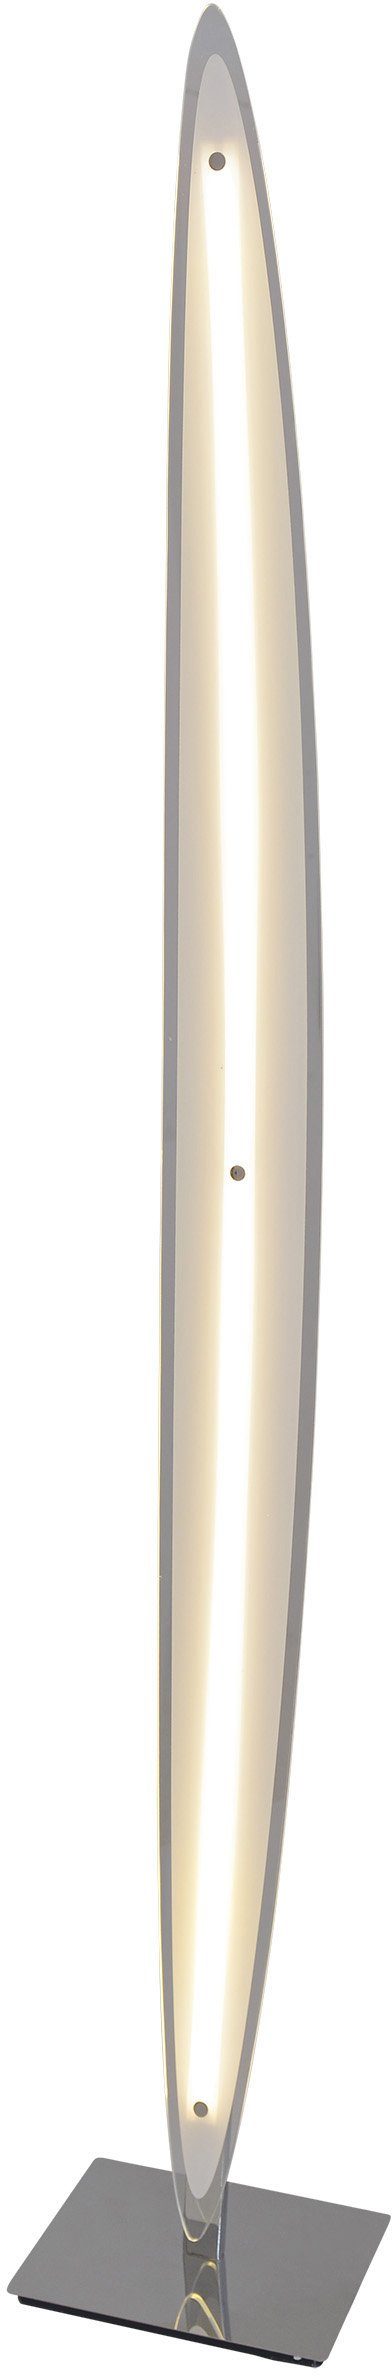 näve LED Stehlampe Surf, Dimmfunktion, LED fest integriert, Warmweiß,  Stehleuchte 